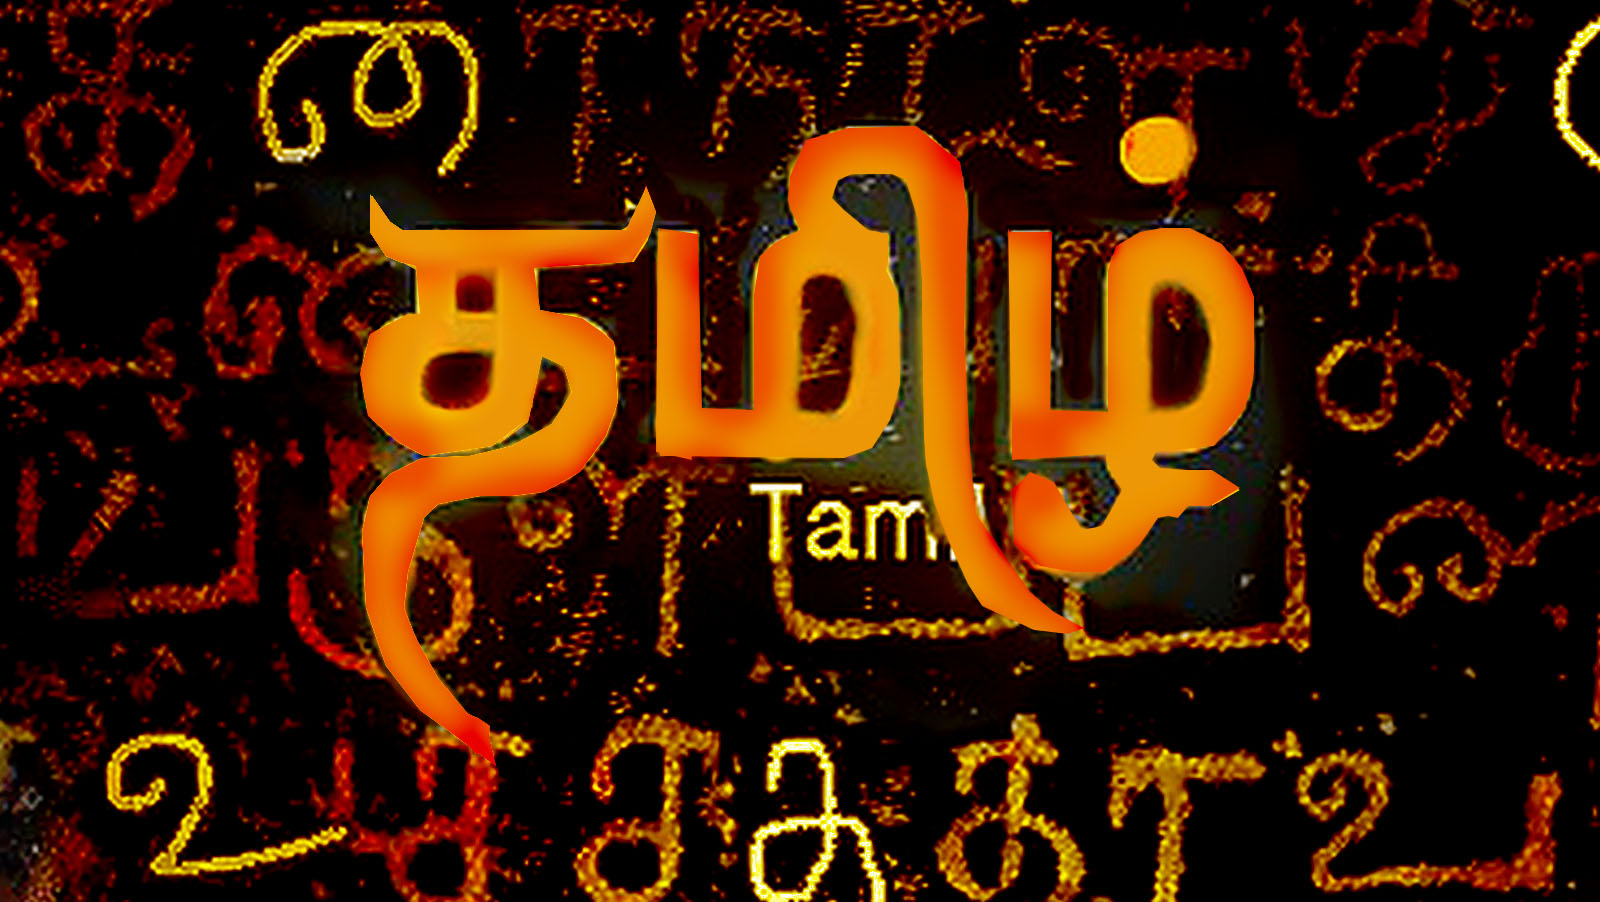 tamil language for tourist